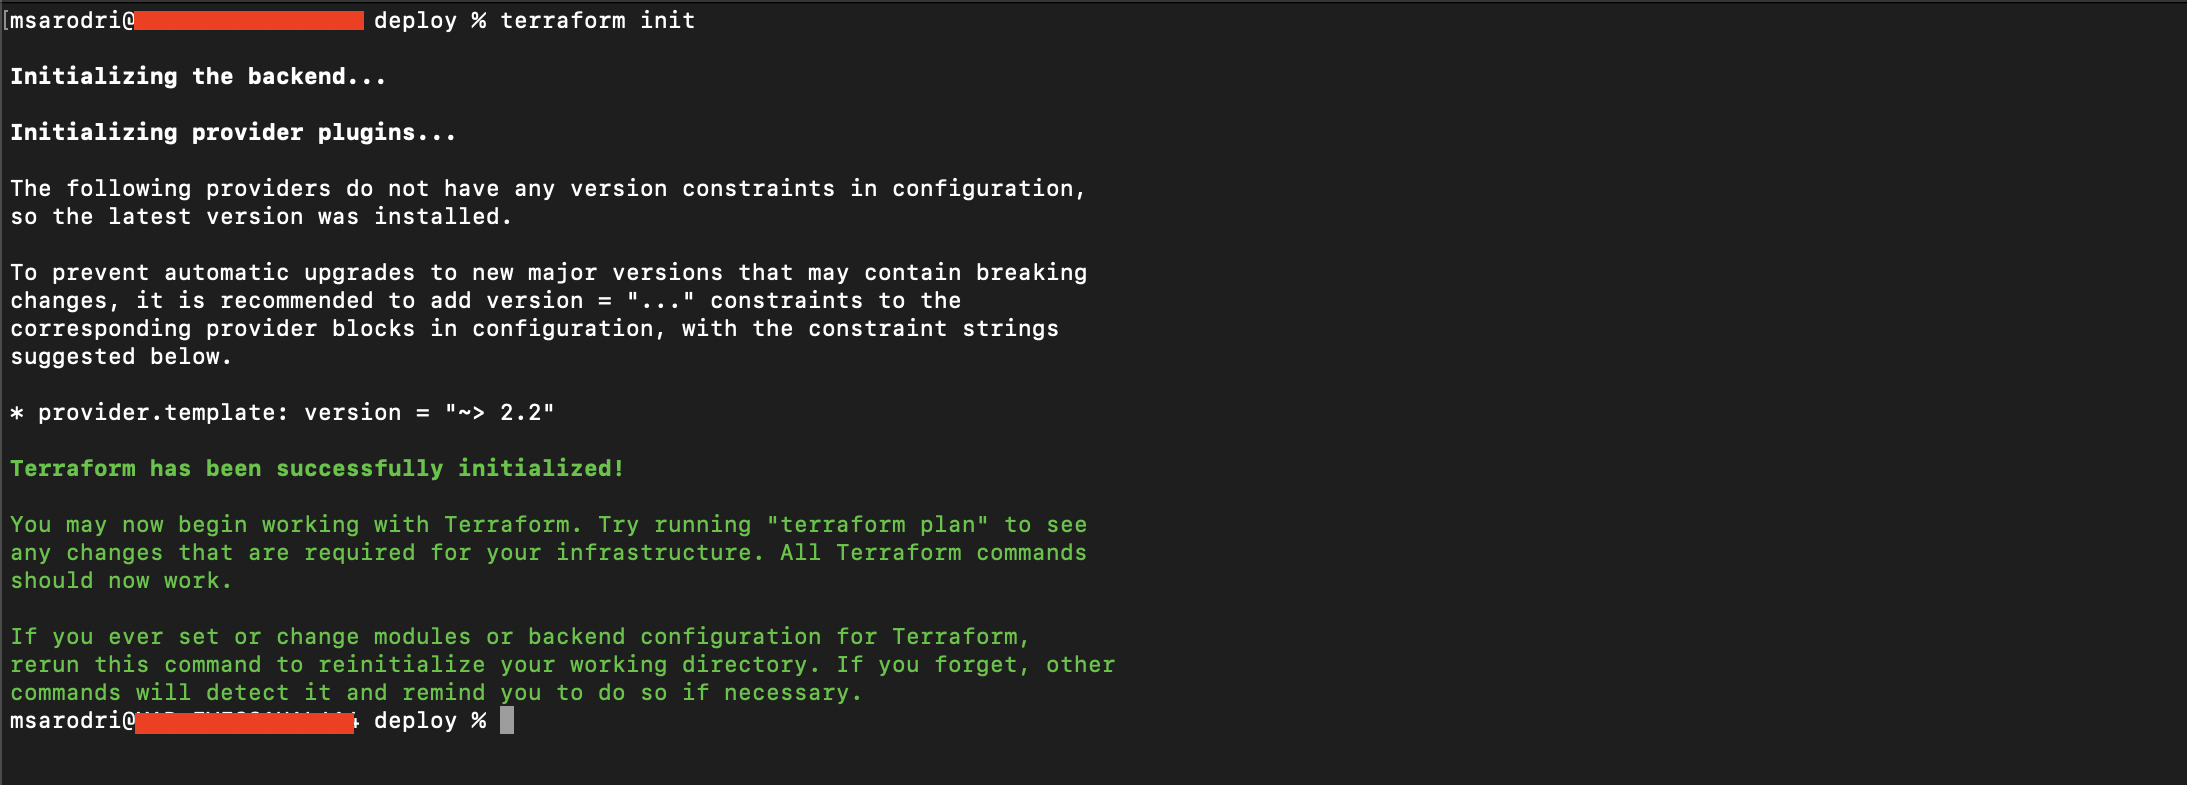 Screenshot showing terraform init being run